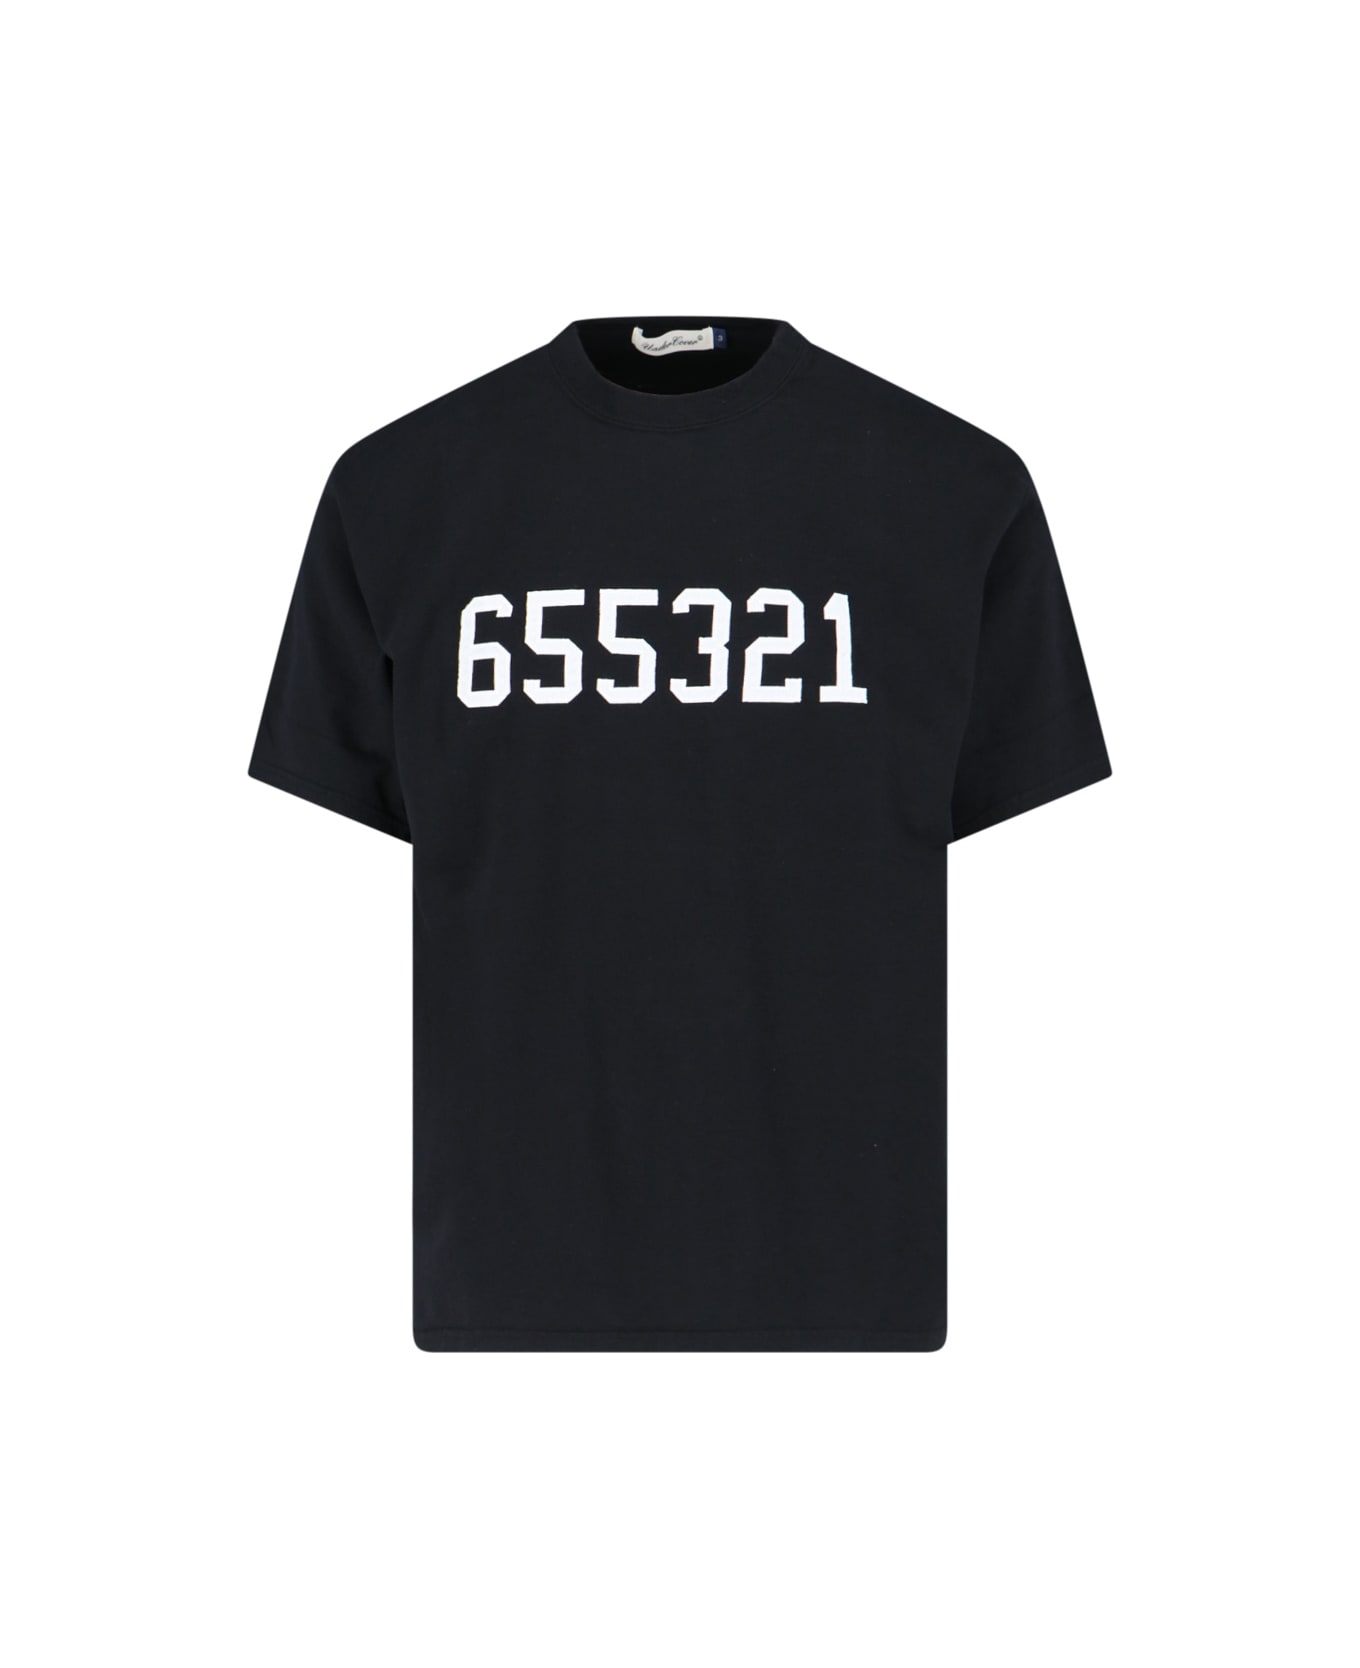 Undercover Jun Takahashi '655321' T-shirt - Black   シャツ